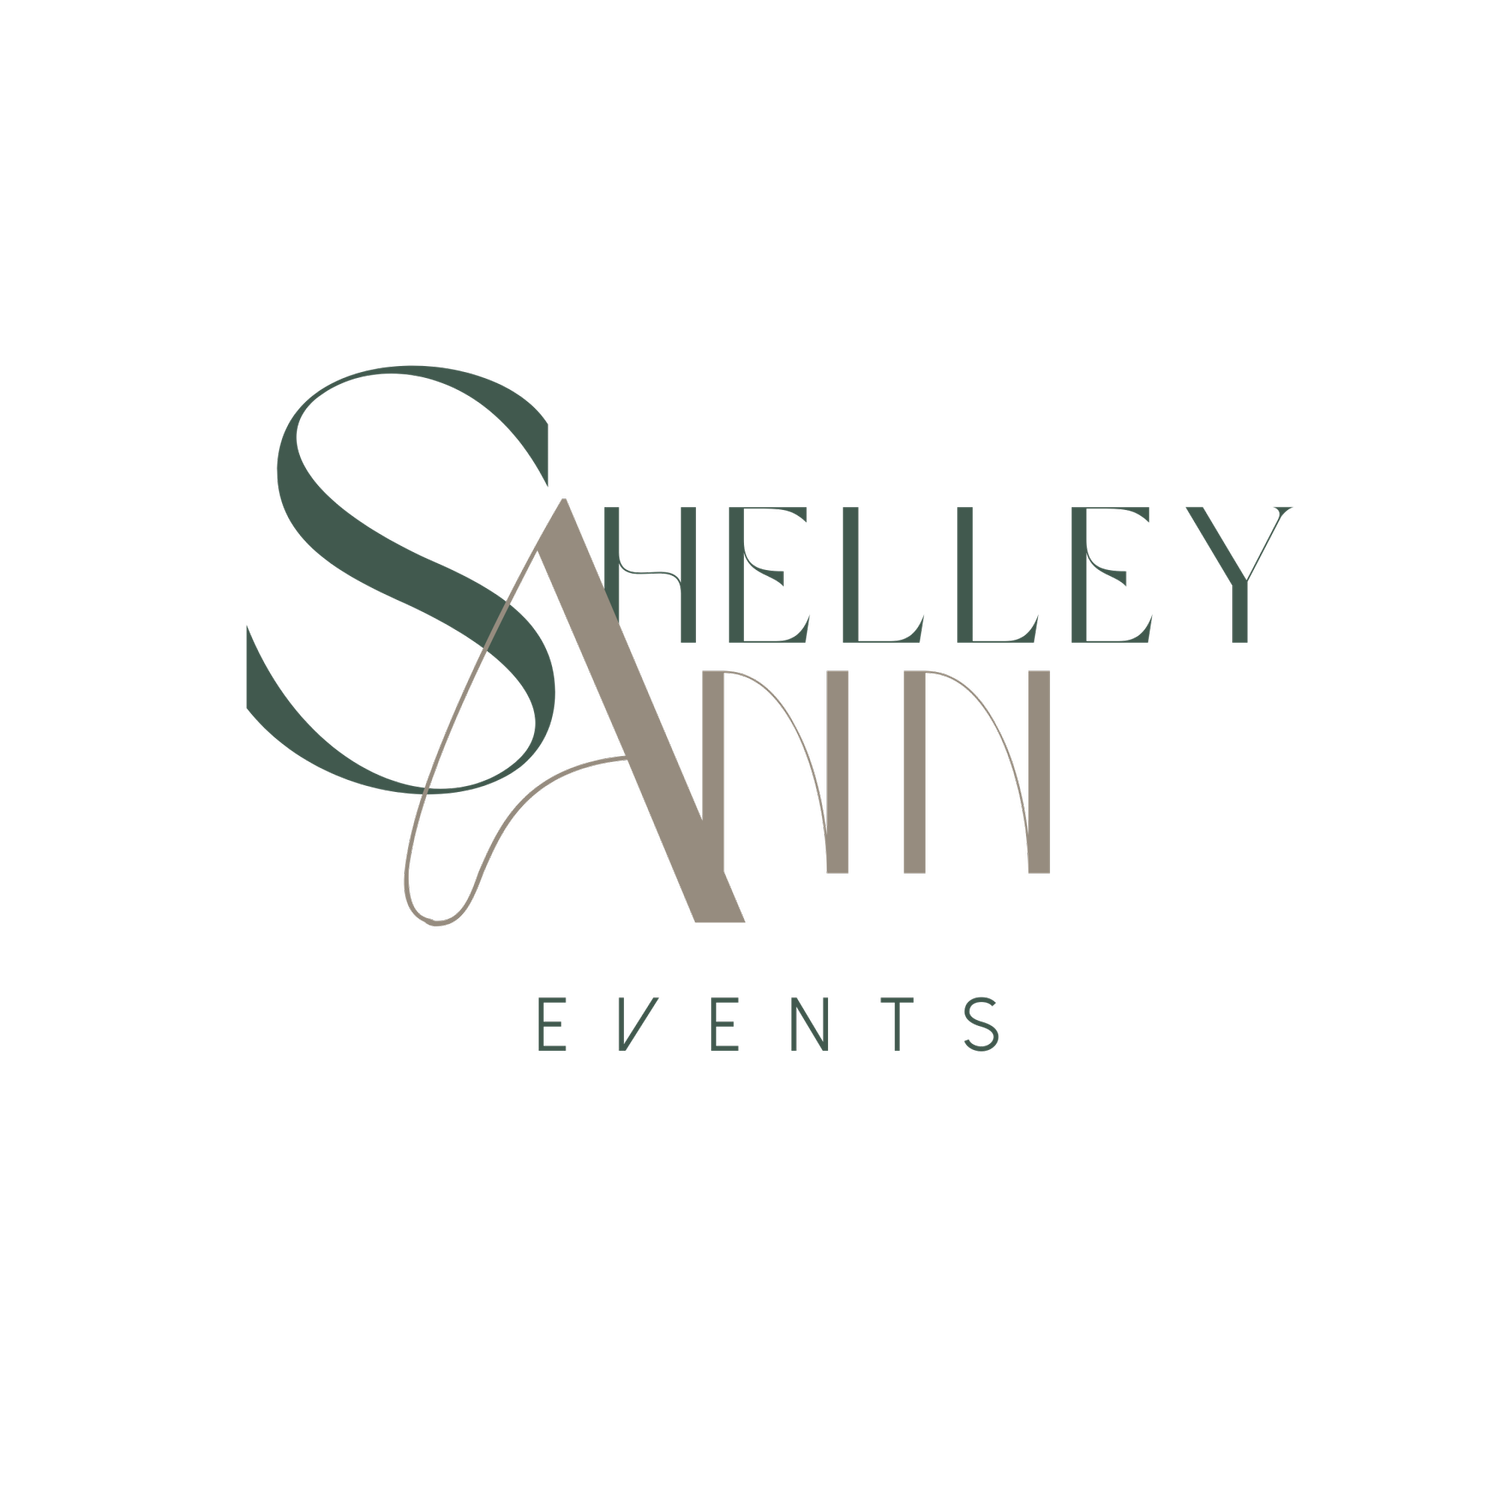 Shelley Ann Events